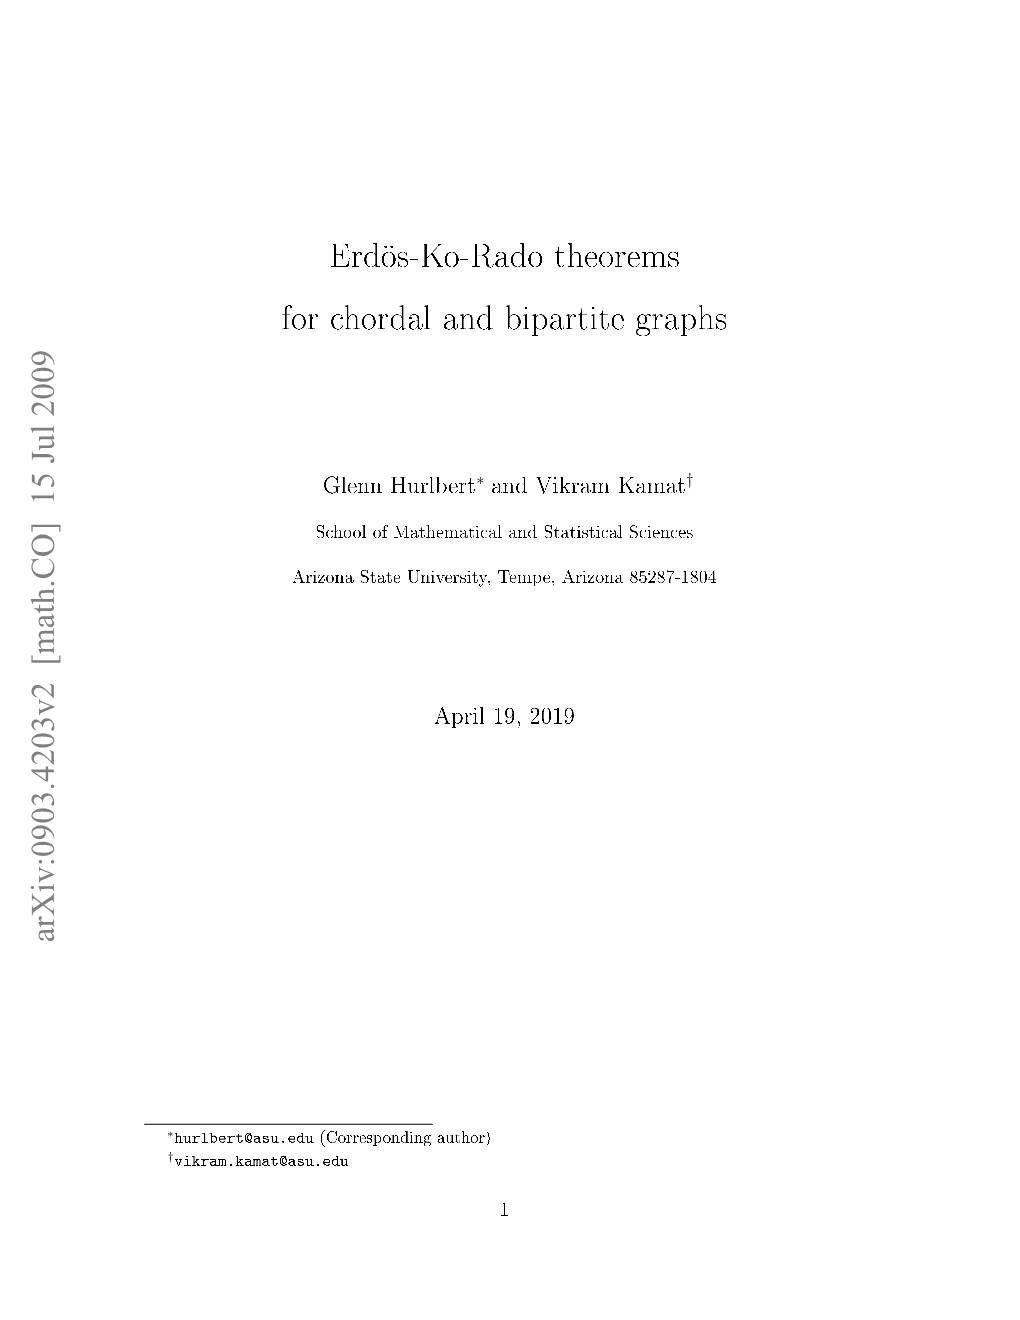 Erdös-Ko-Rado Theorems for Chordal and Bipartite Graphs Arxiv